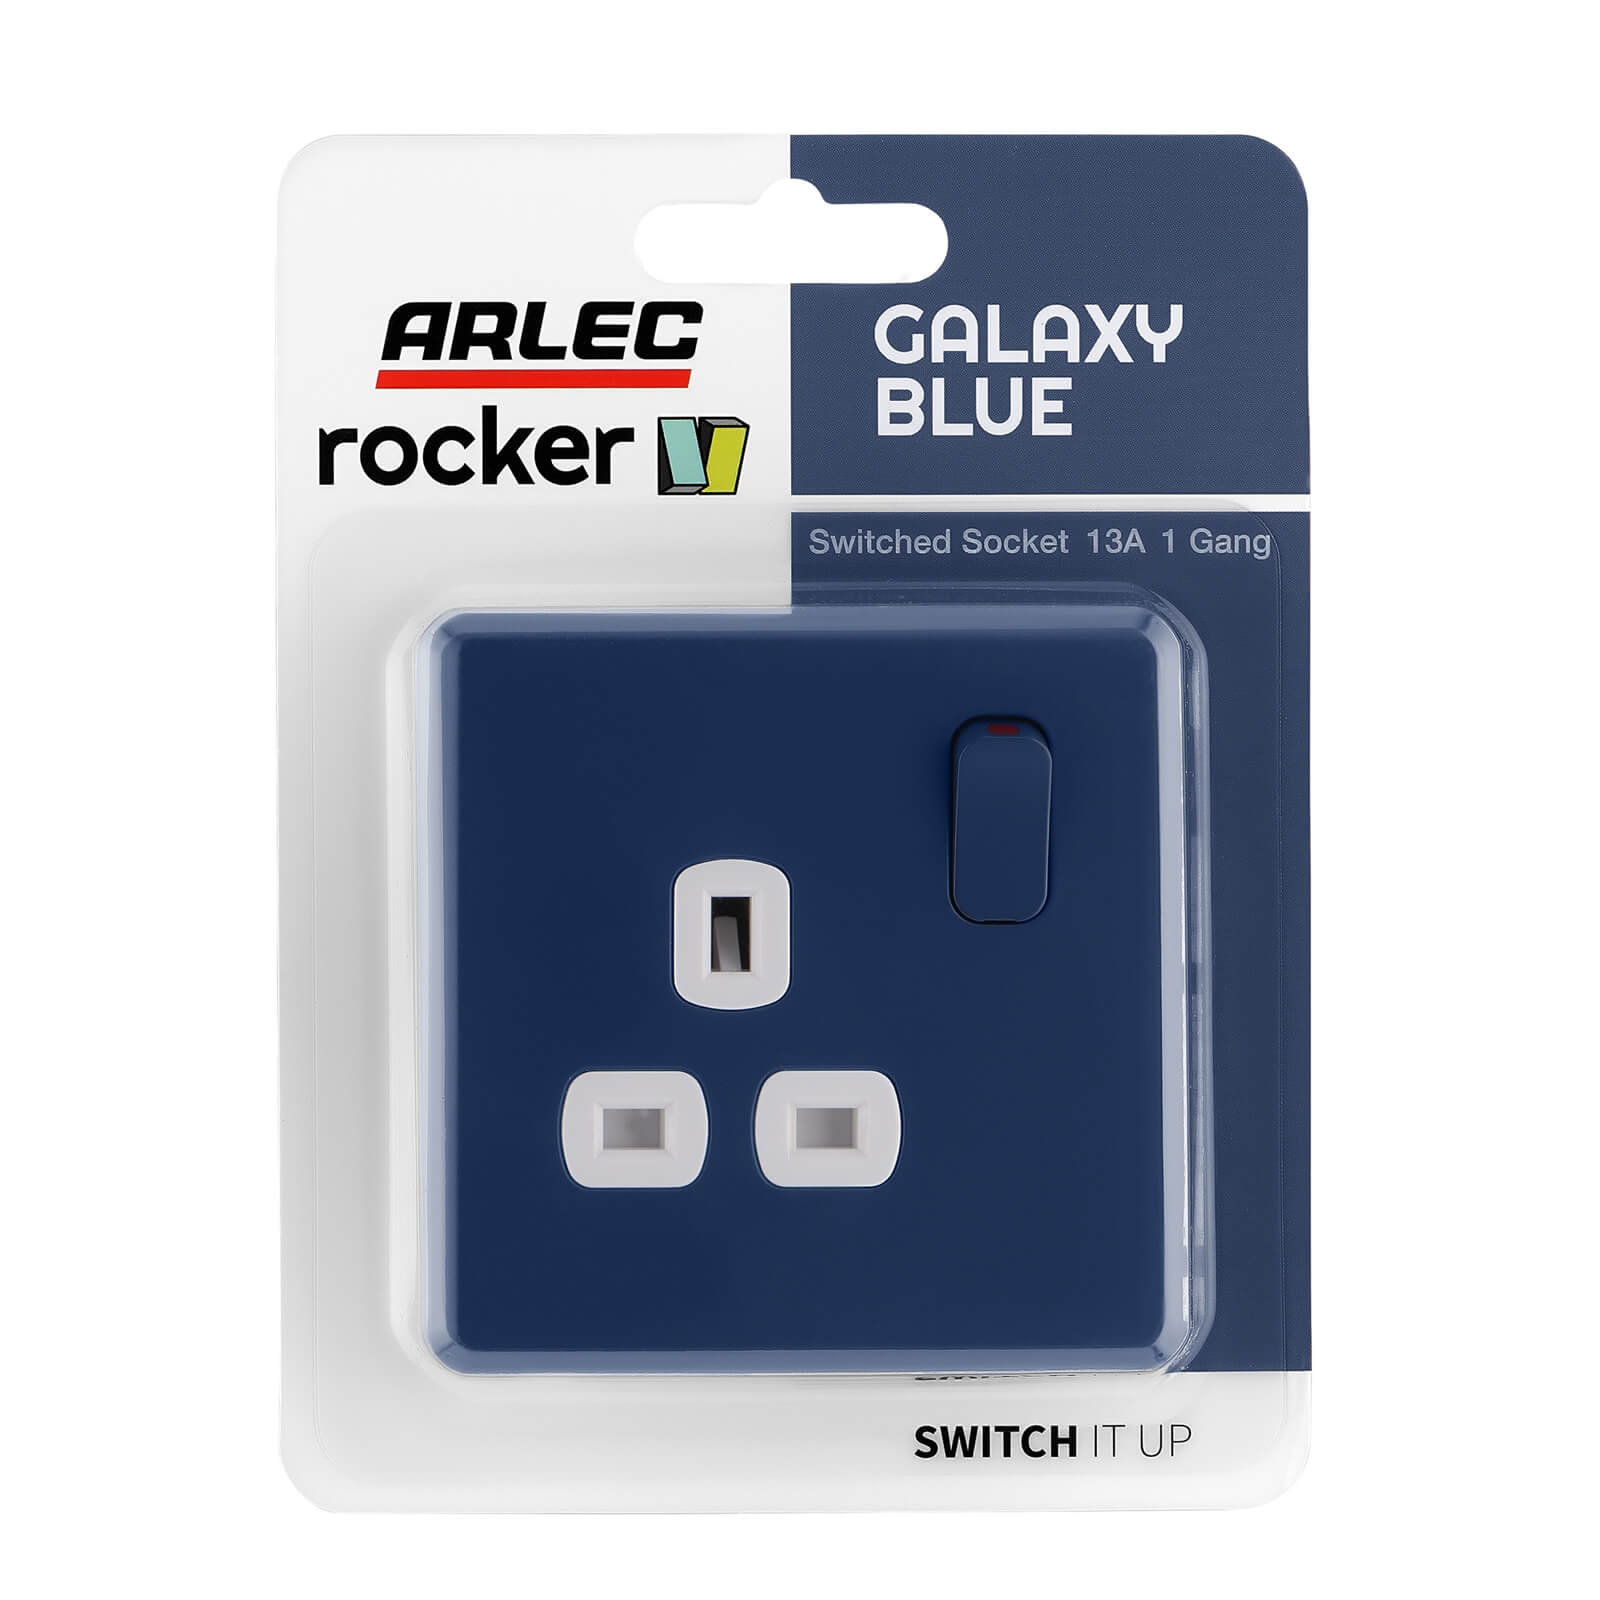 Arlec Rocker  13A 1 Gang Galaxy Blue Single switched socket